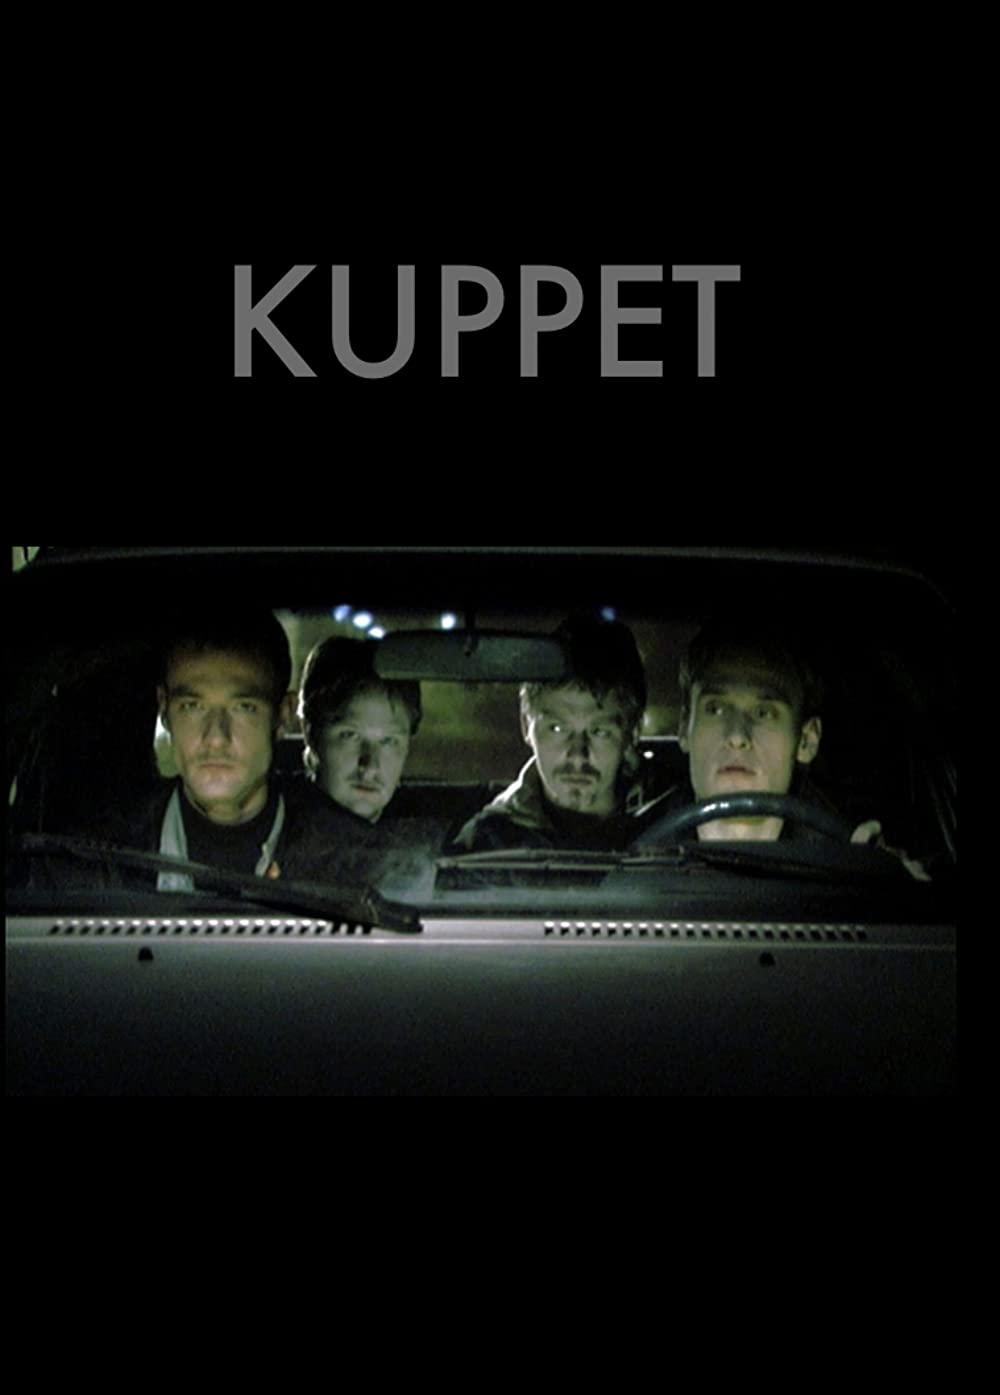 Download Kuppet Movie | Kuppet Hd, Dvd